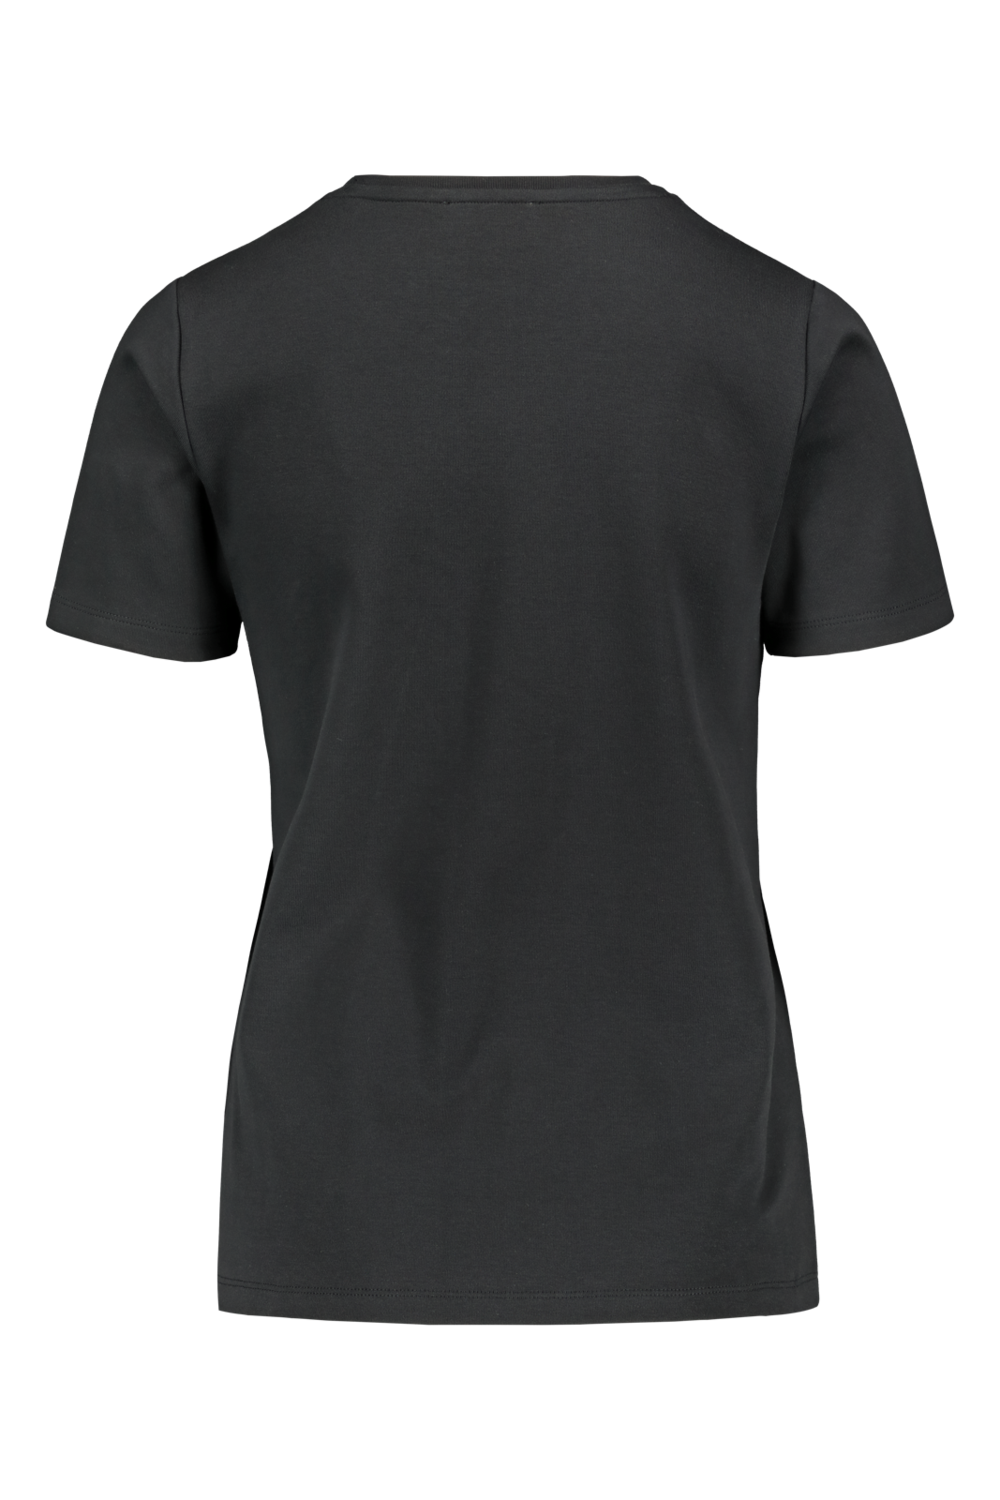 Kaiko The T-shirt, Black